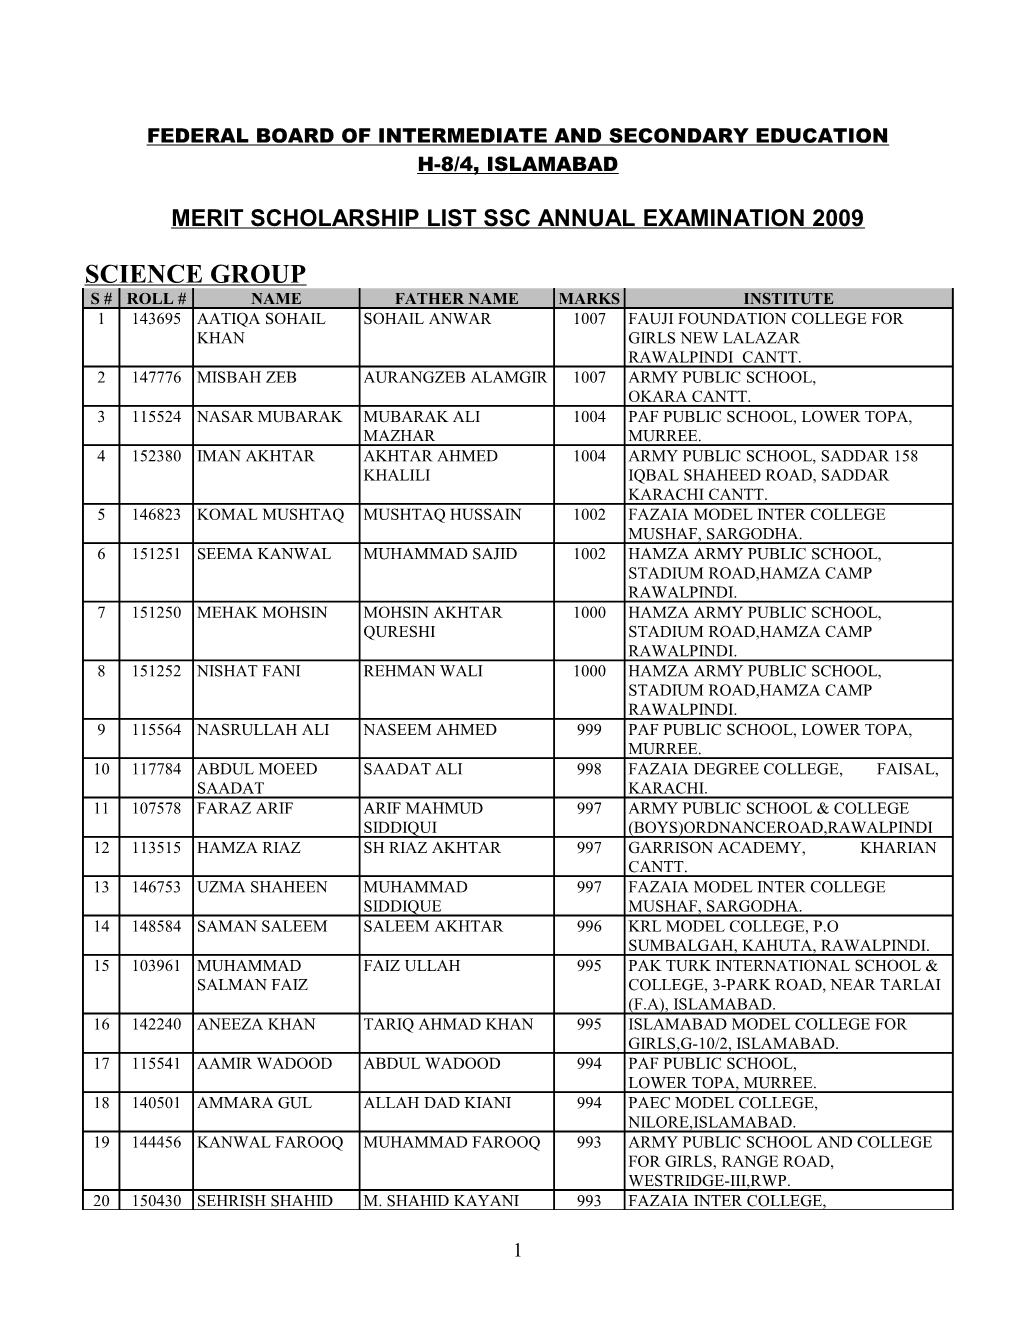 Merit Scholarship List Ssc Annual Examination 2009